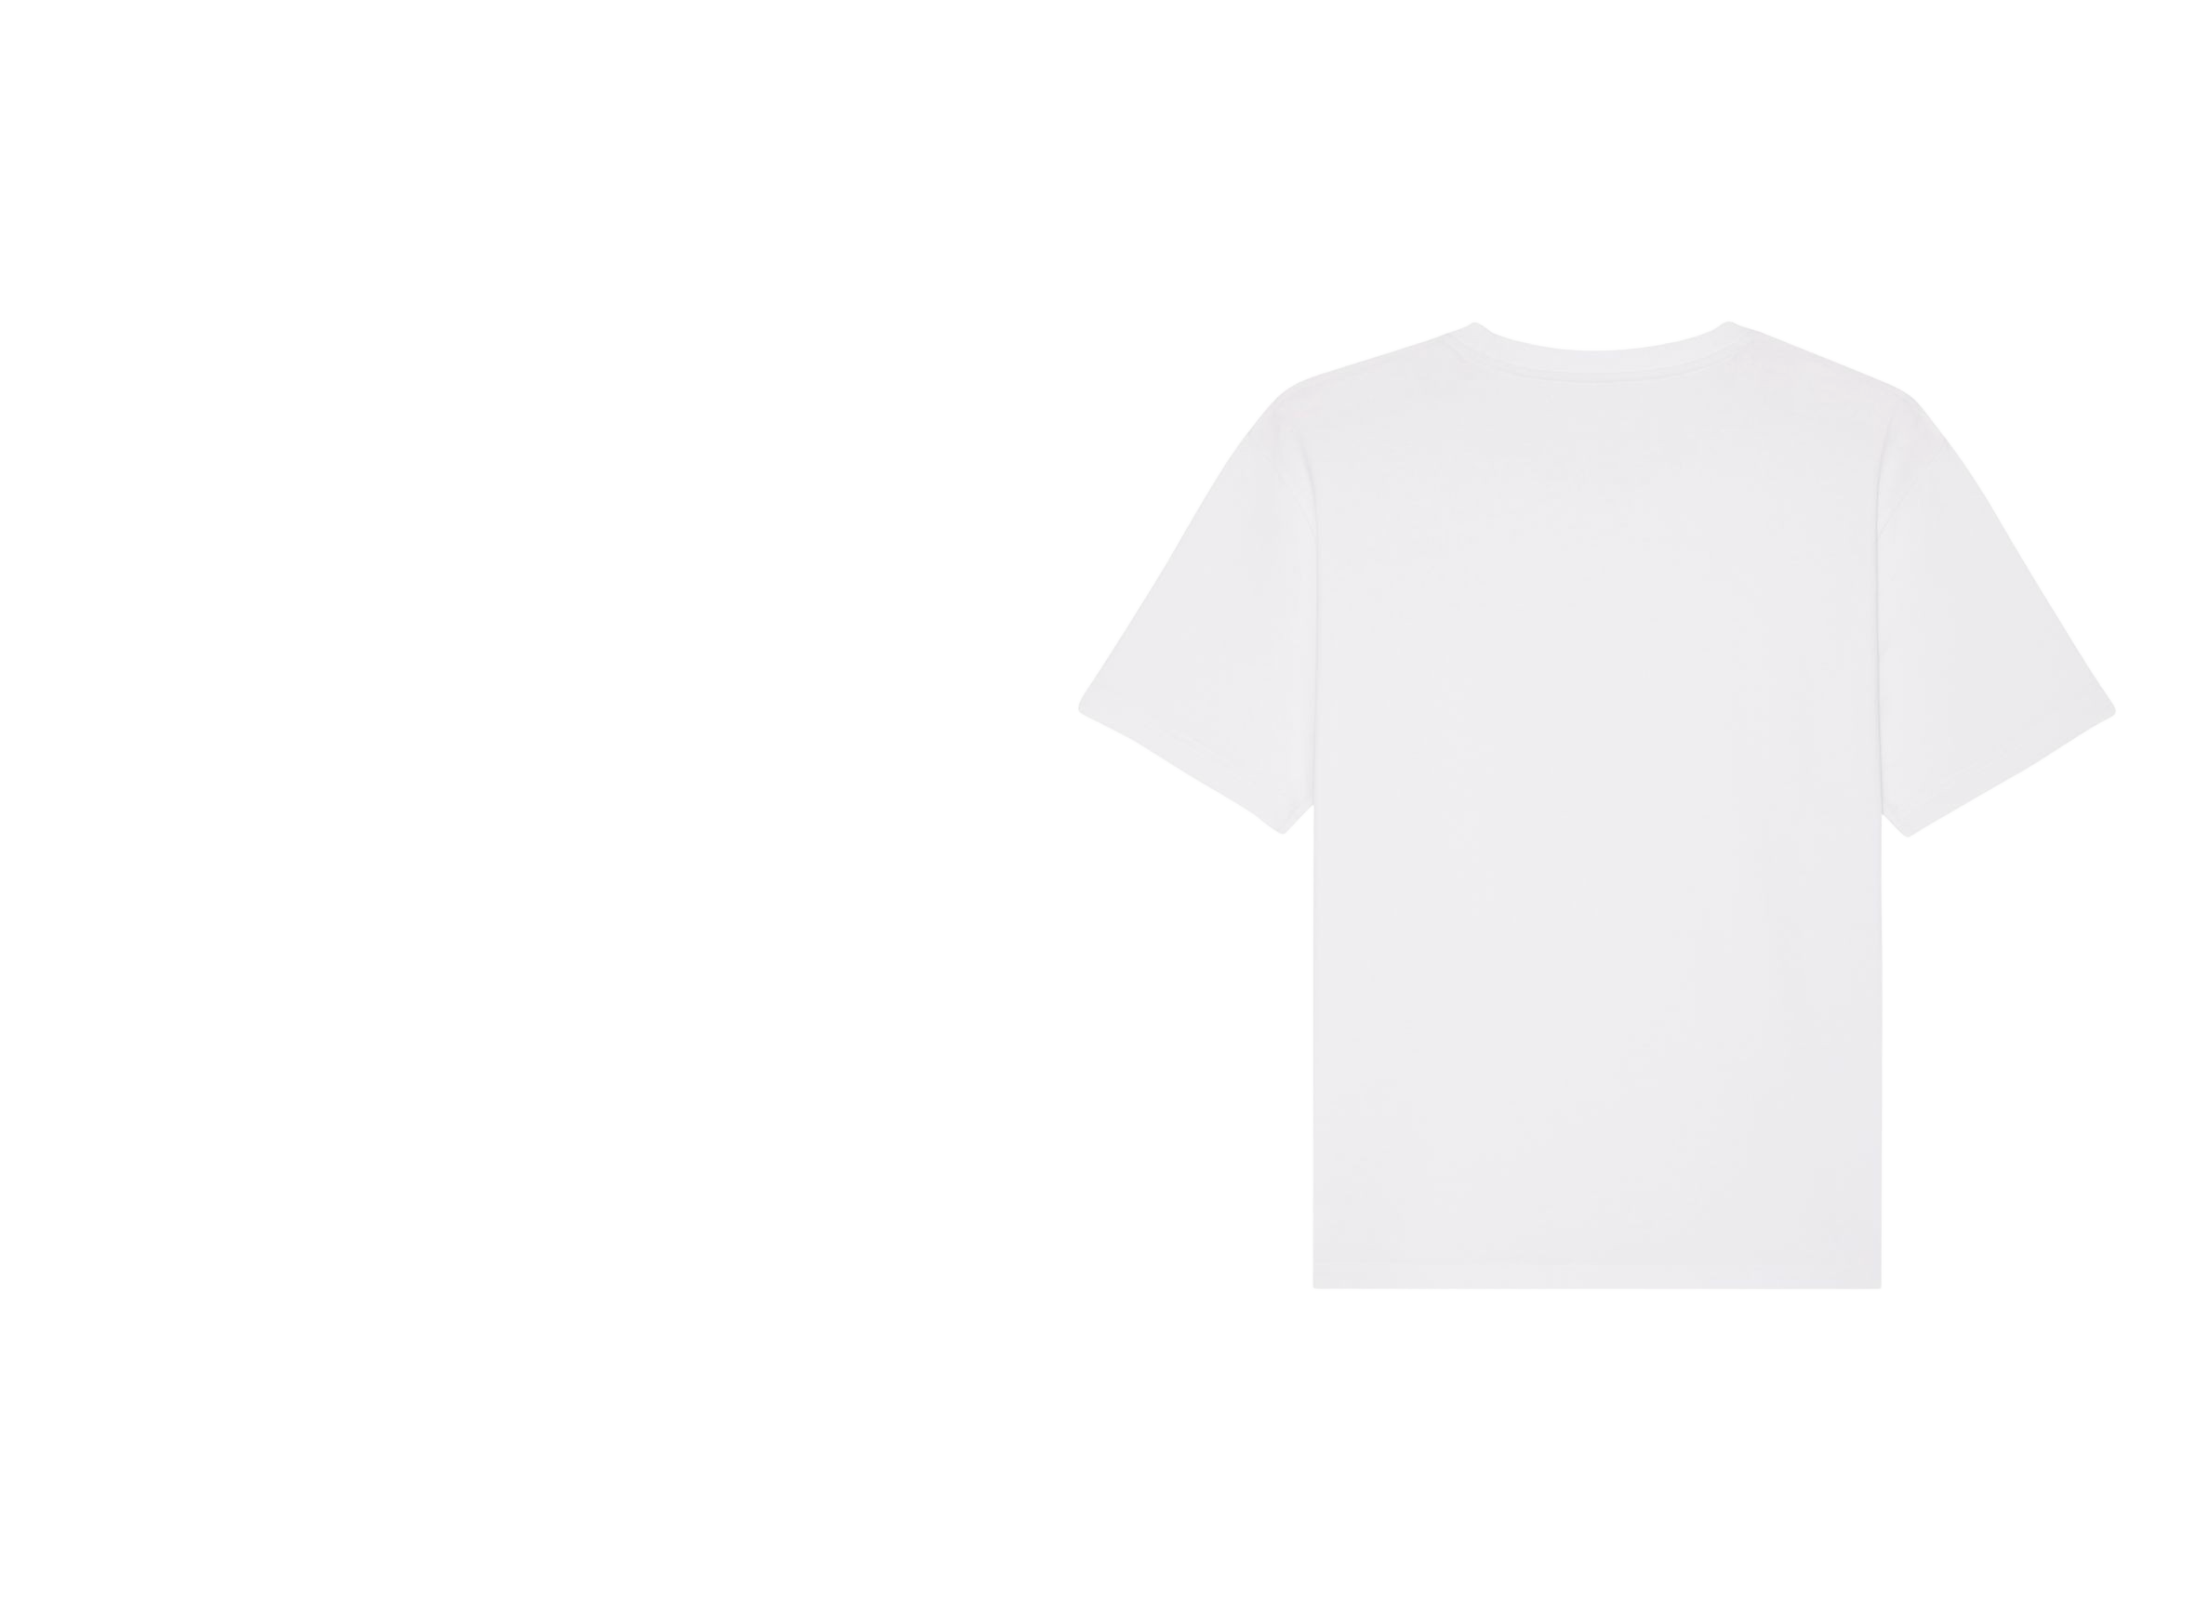 Unisex T- Shirt Oui